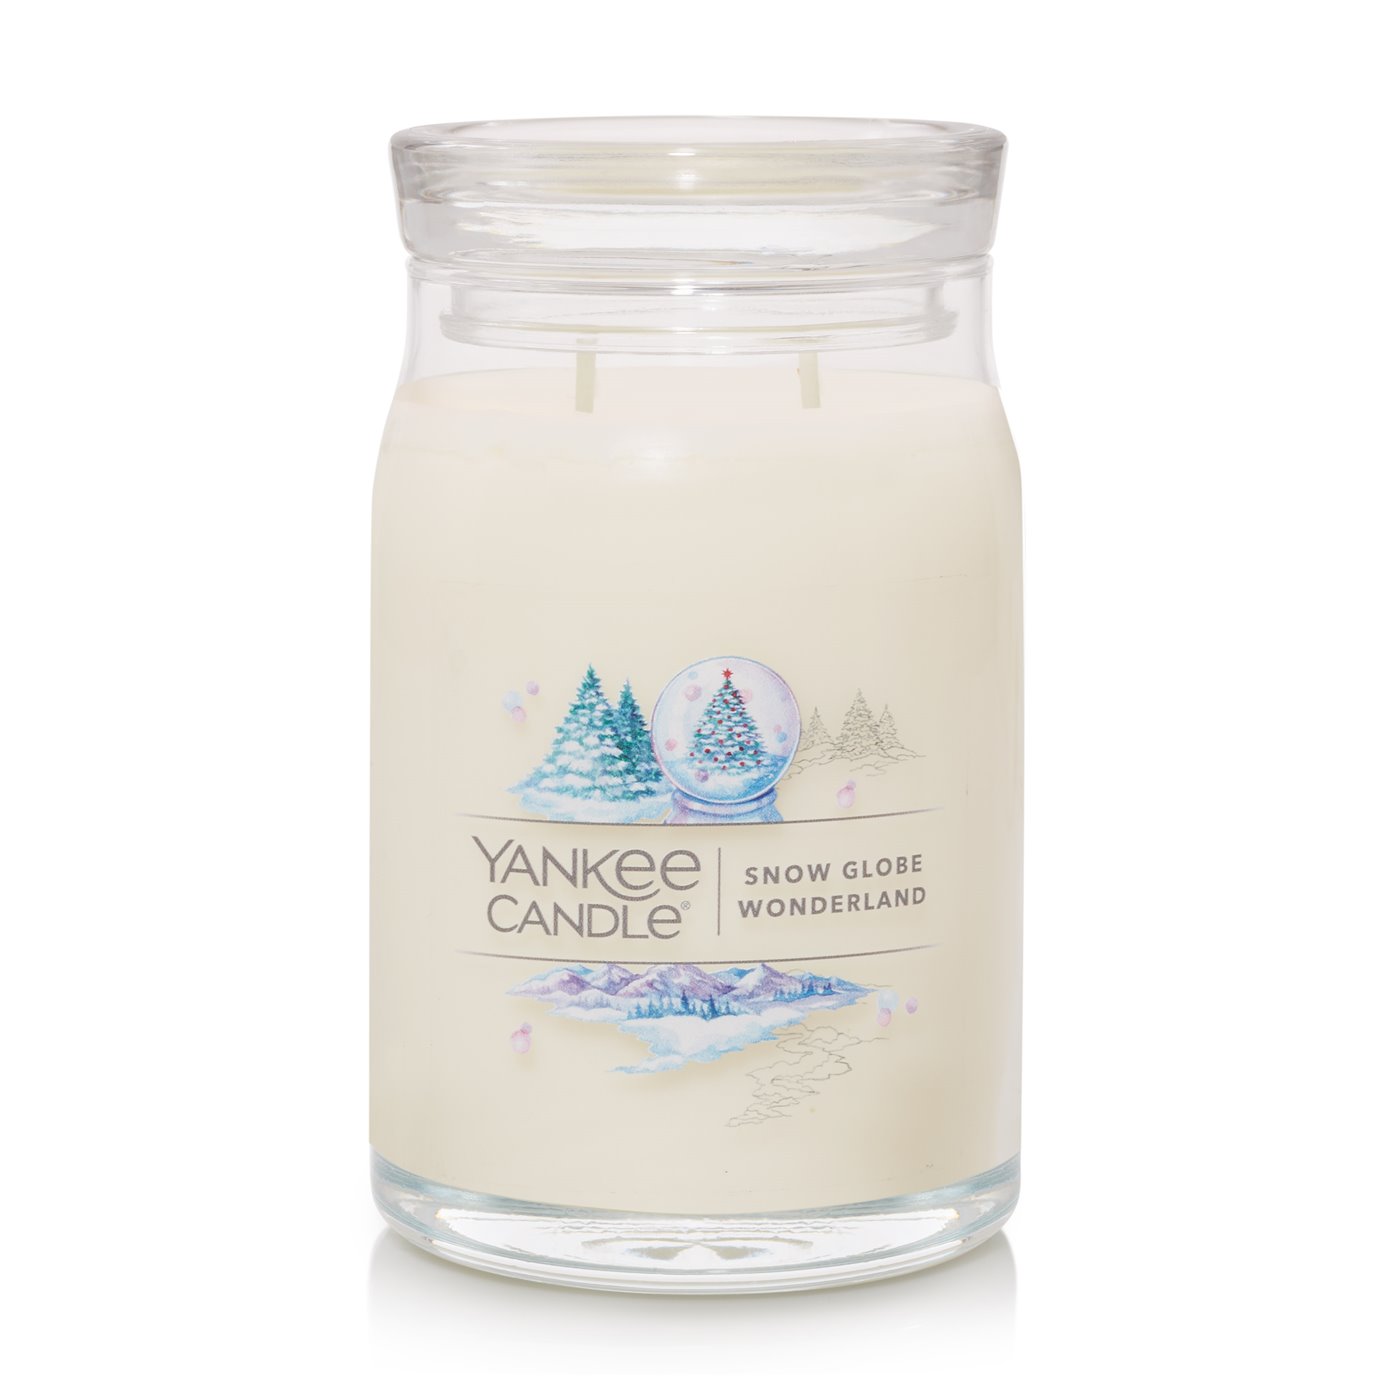 Yankee Candle Snow Globe Wonderland Signature Large 2-wick Jar Candle